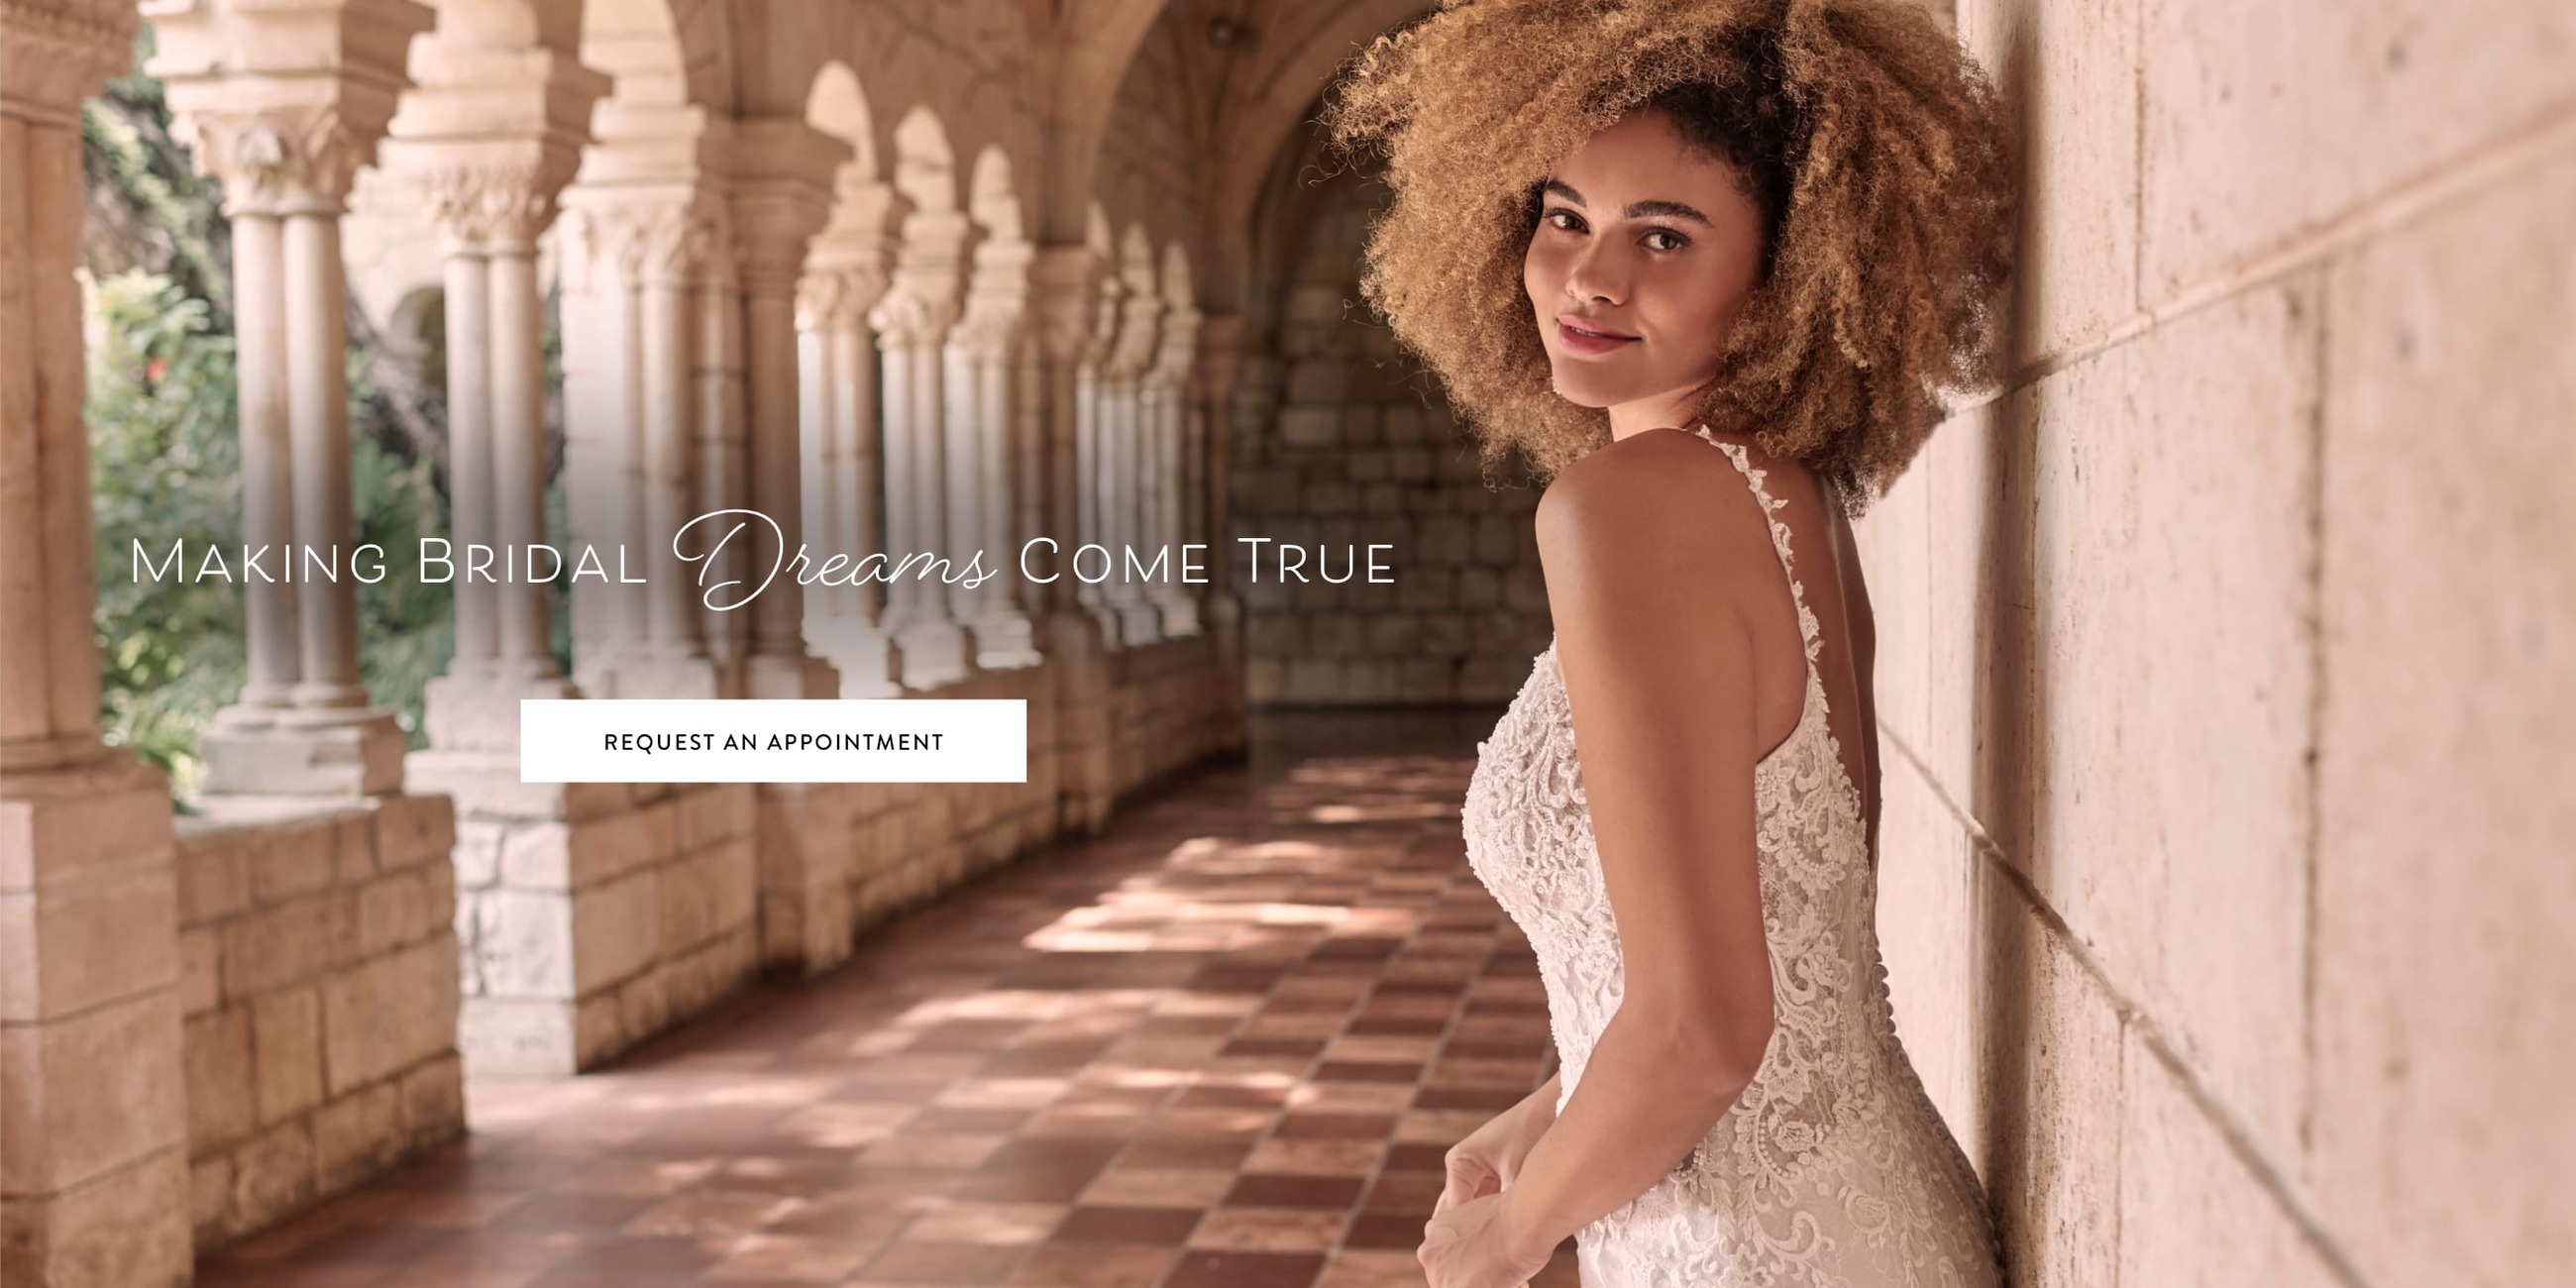 Wedding dresses at Bridal Boutique and Tux Shoppe. Find your dream dress today. Desktop image.